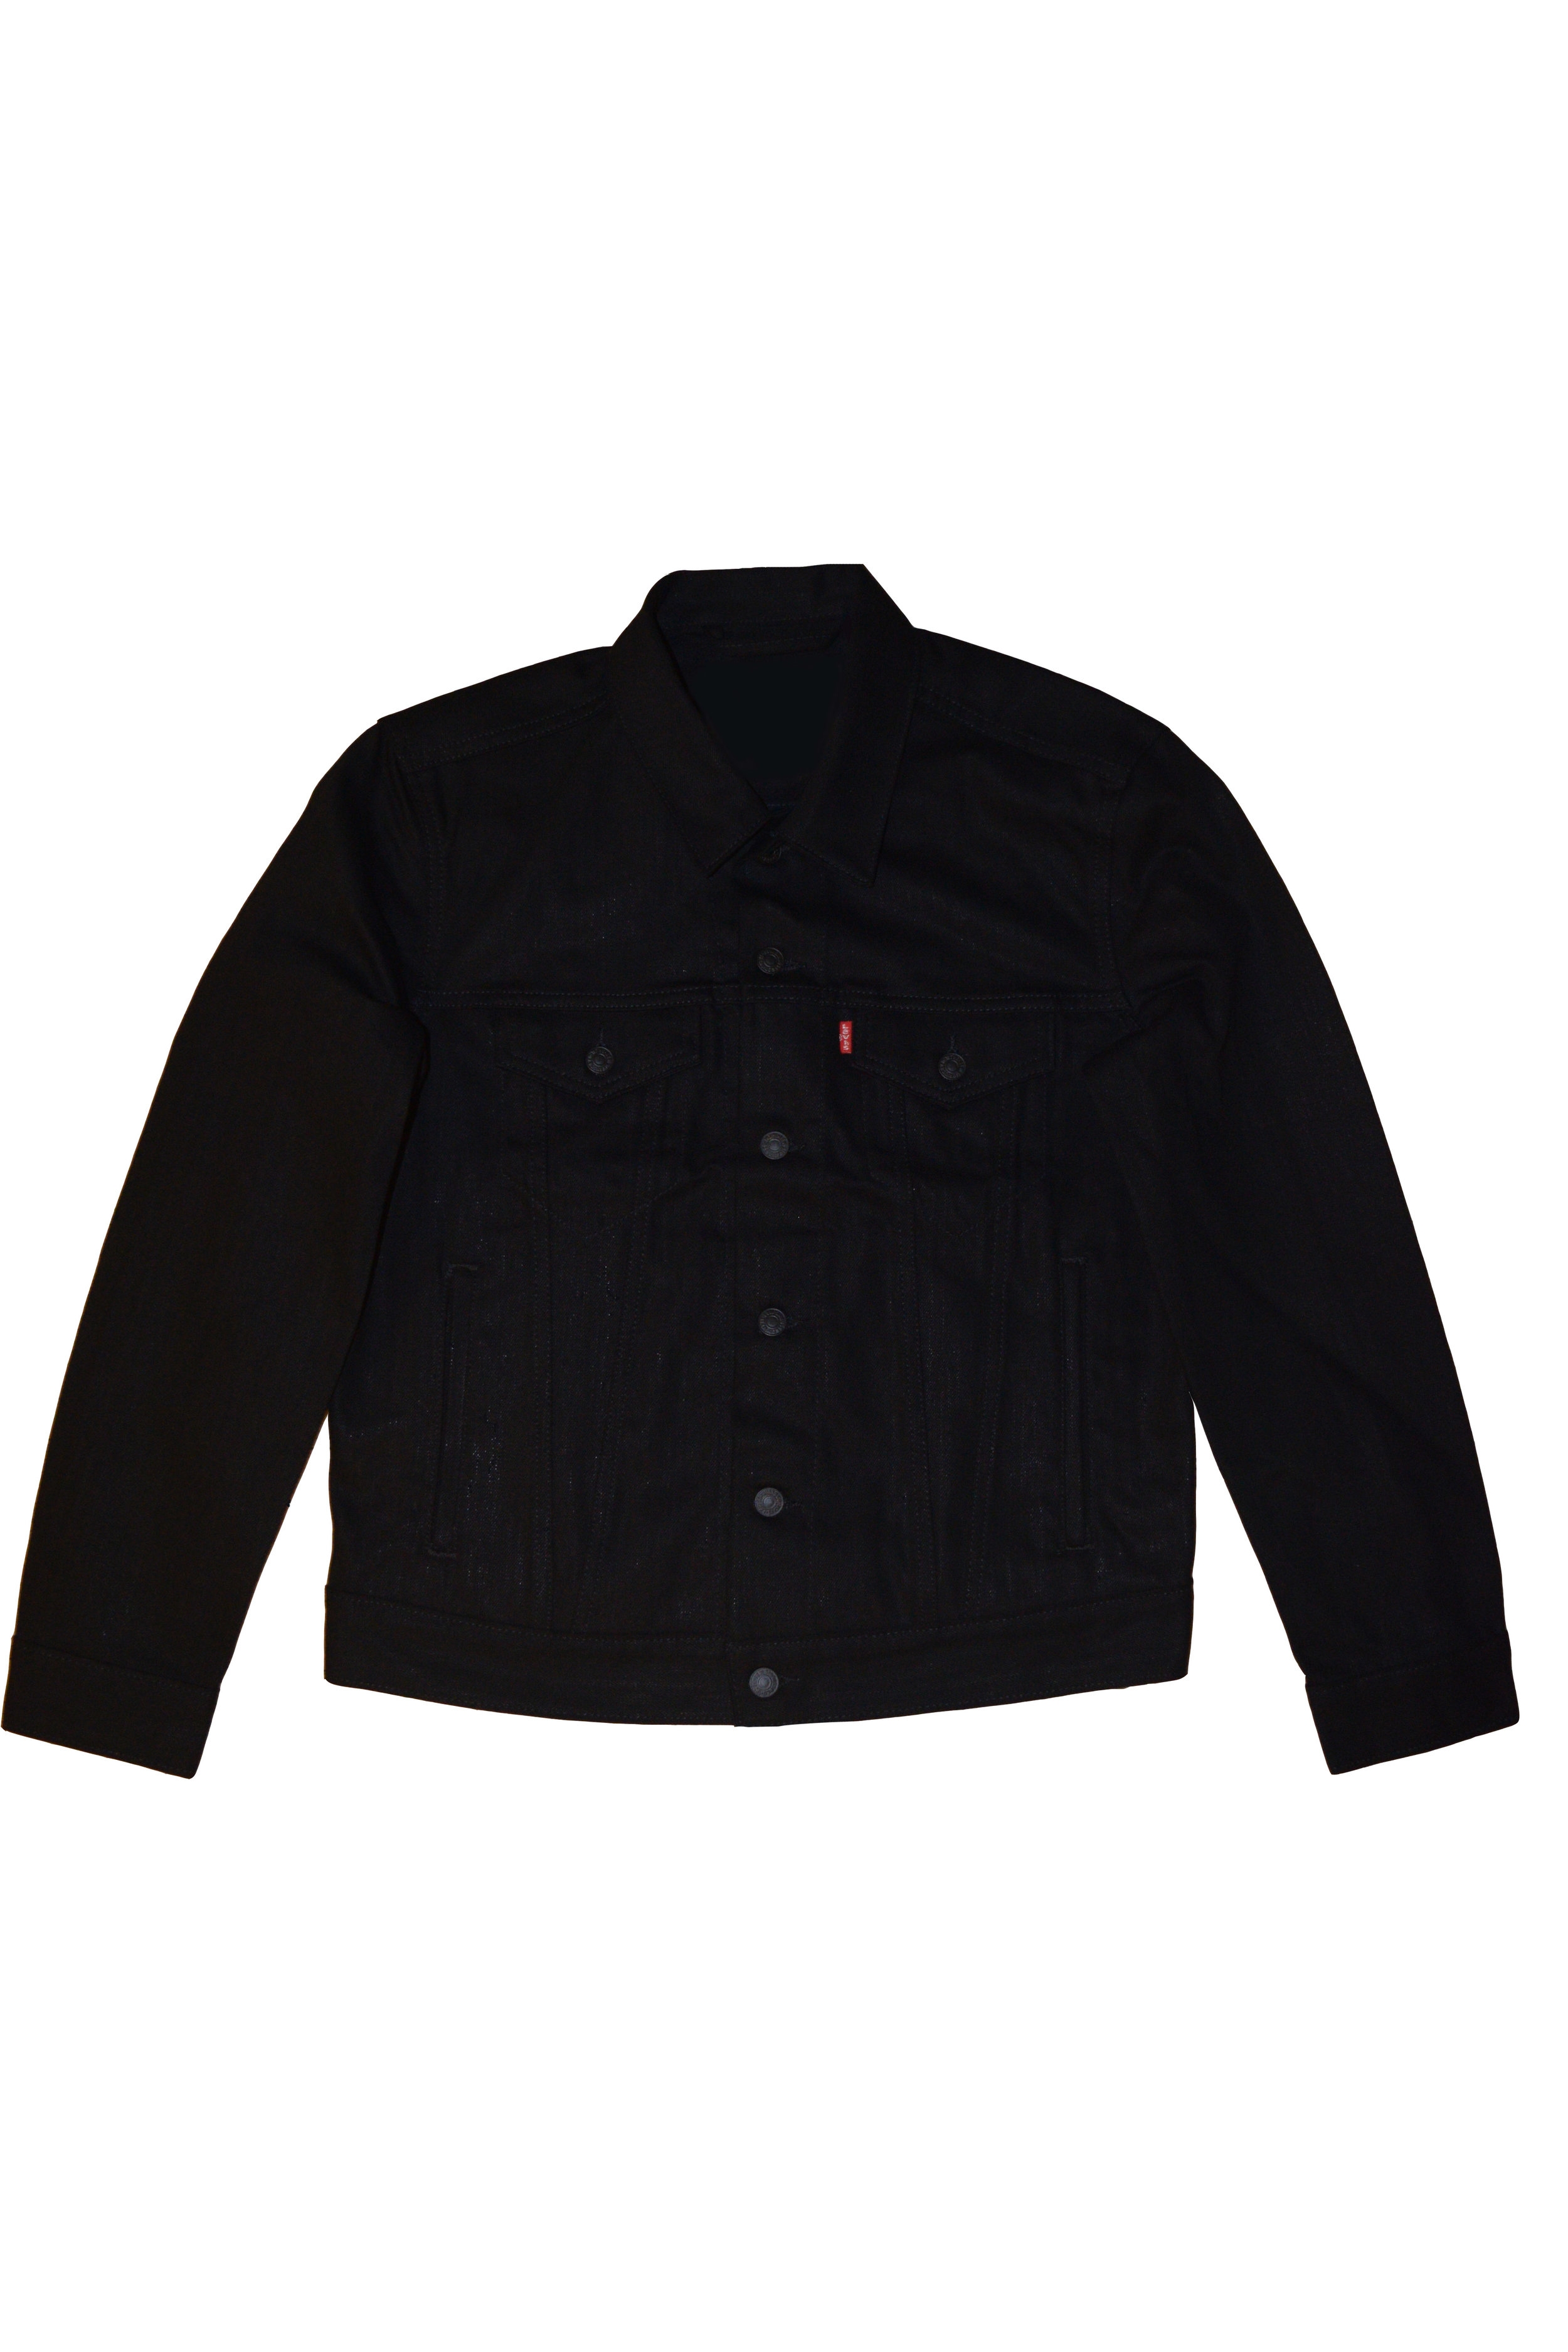 black waxed denim jacket